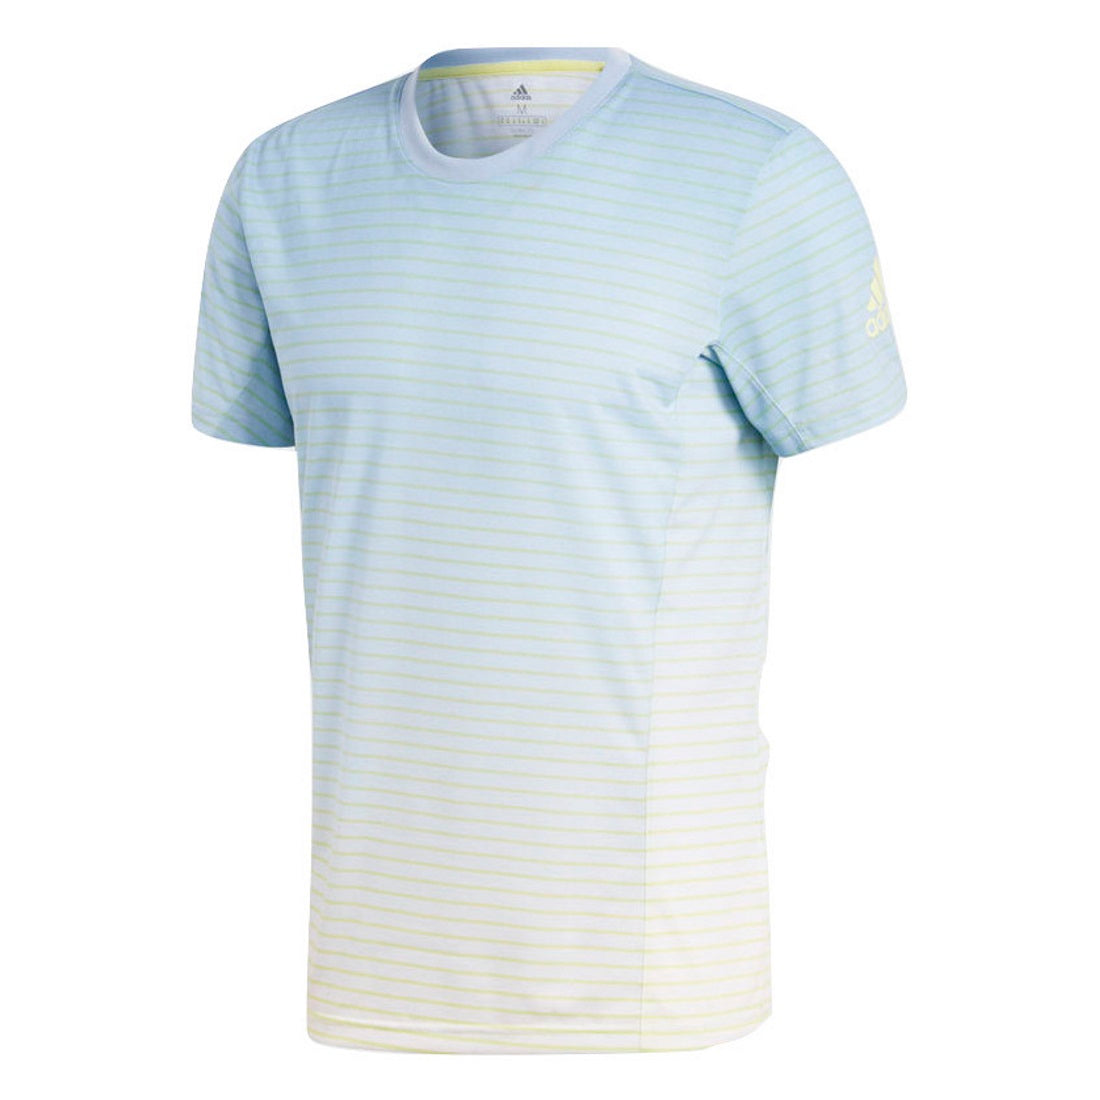 Adidas Men's Melbourne Striped Tennis T-Shirt